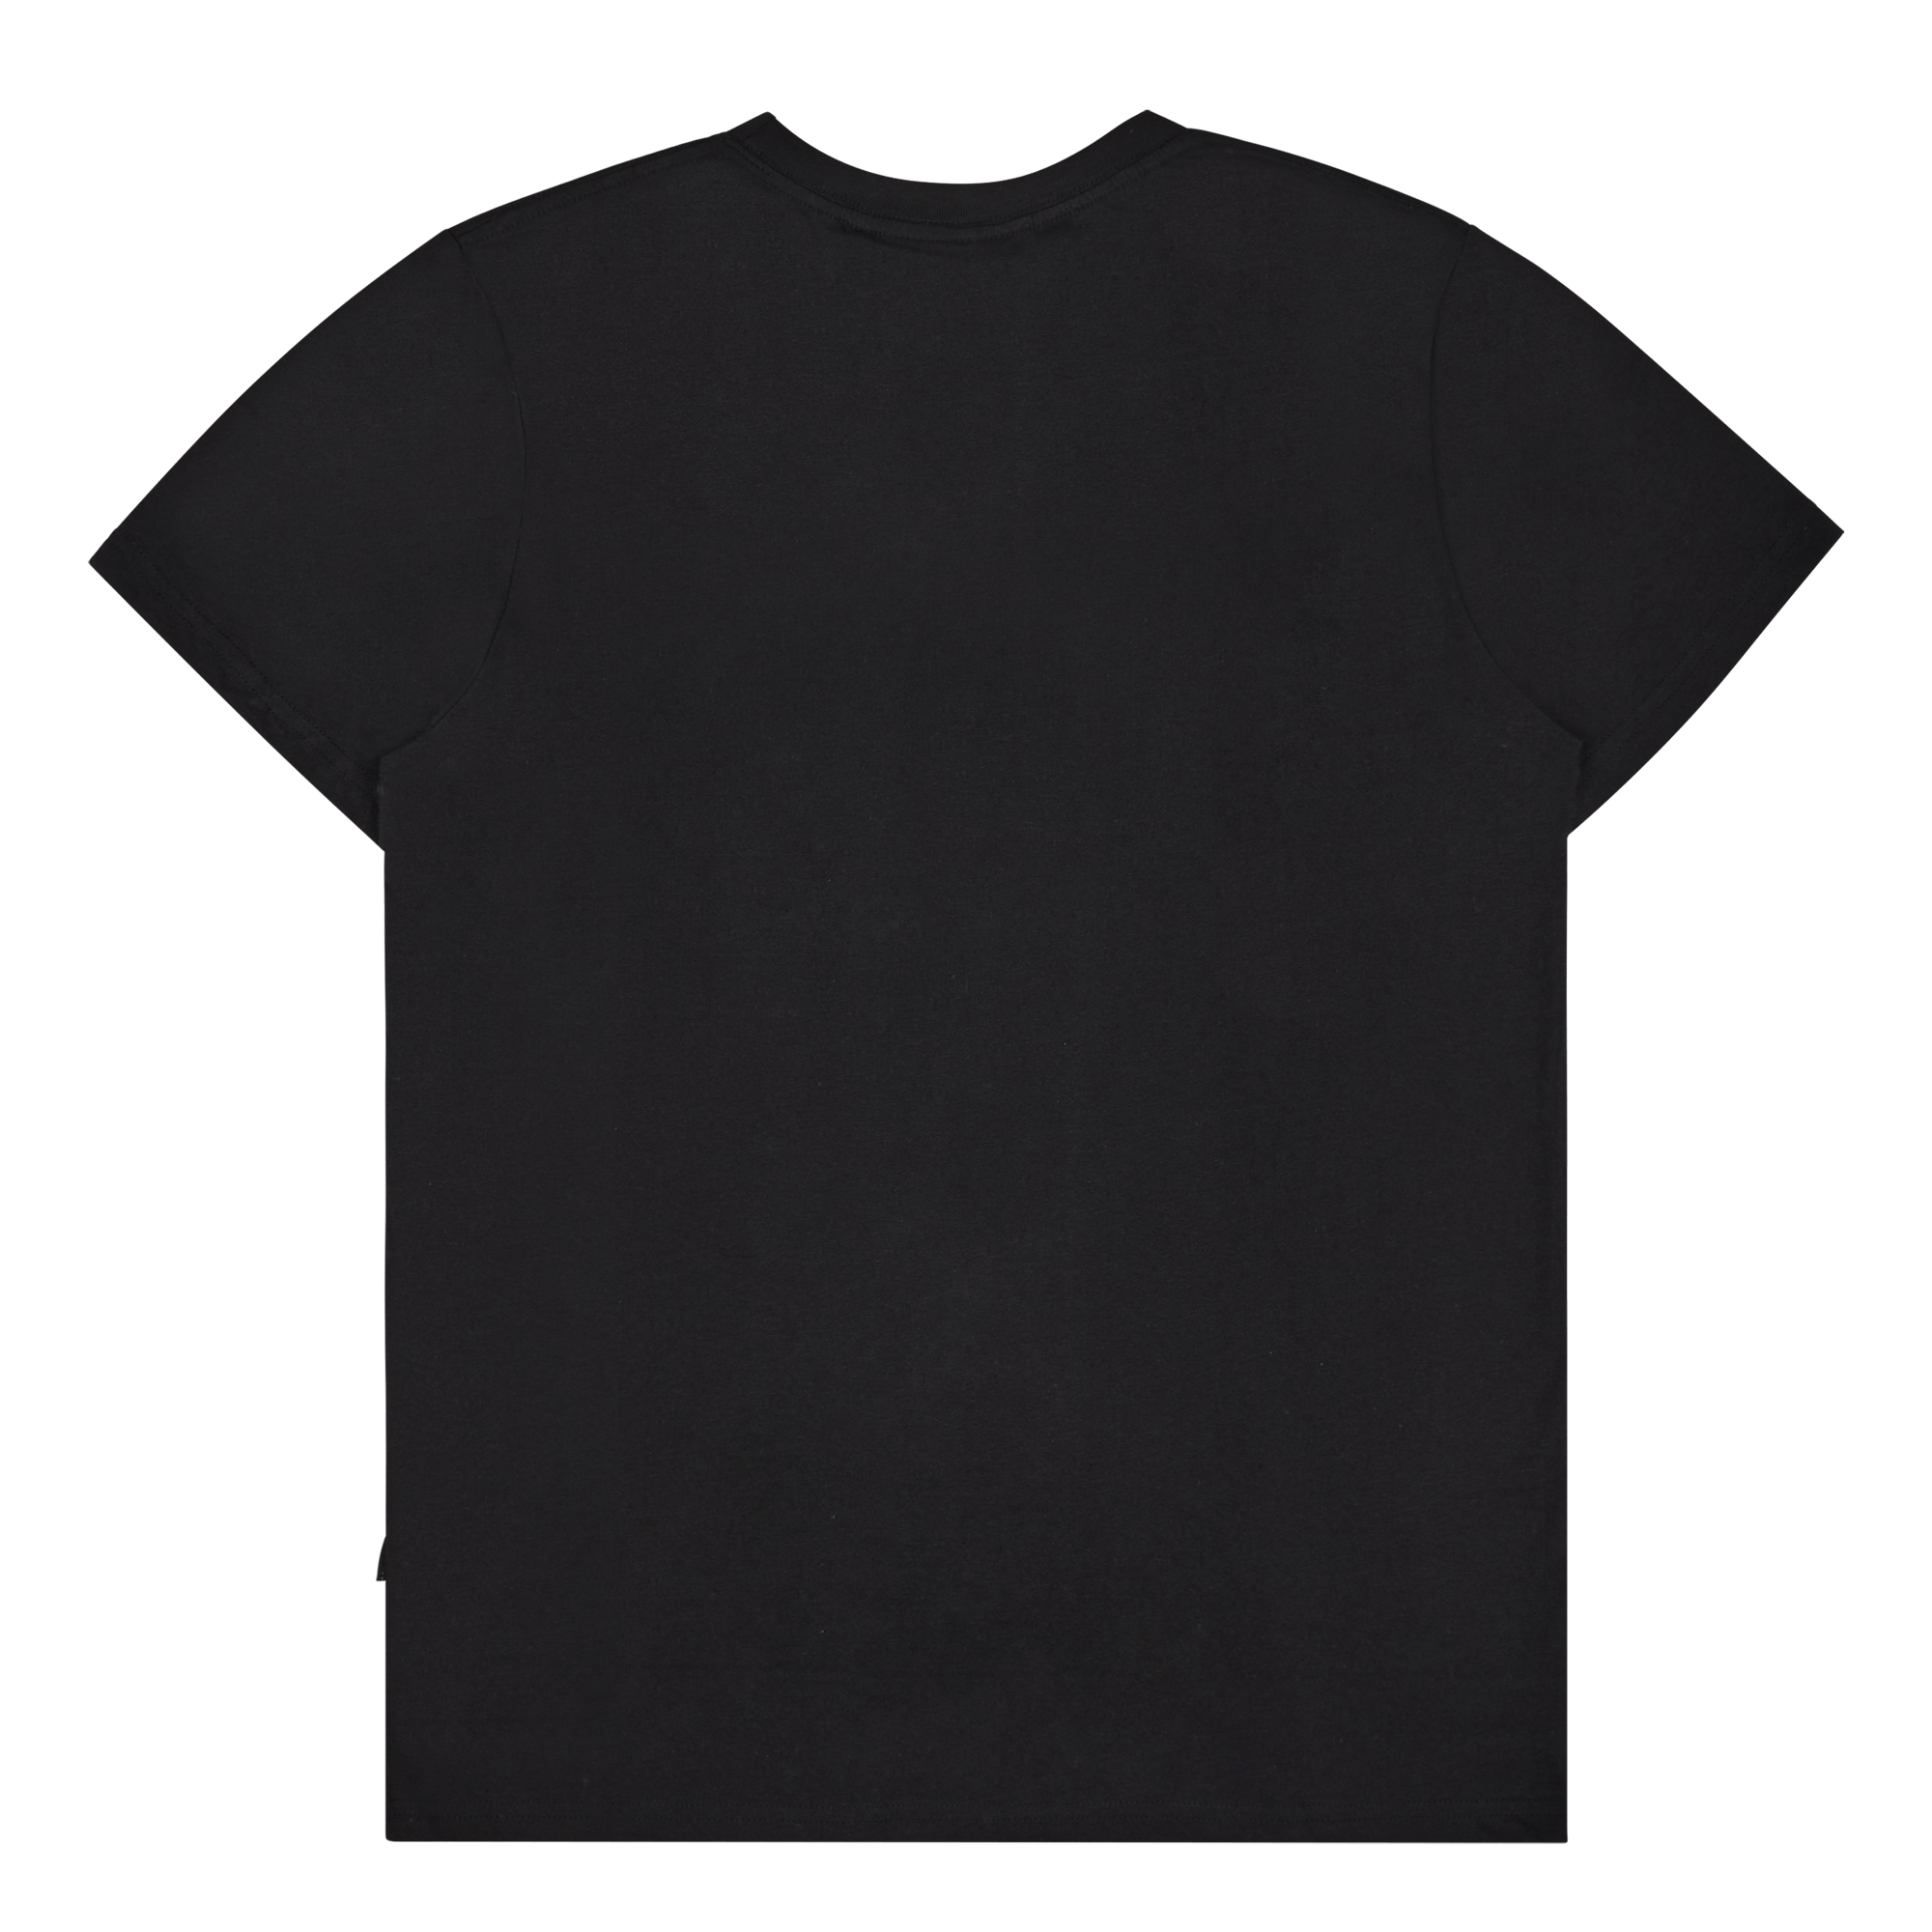 Dedicated X Seinfeld T-shirt S Black